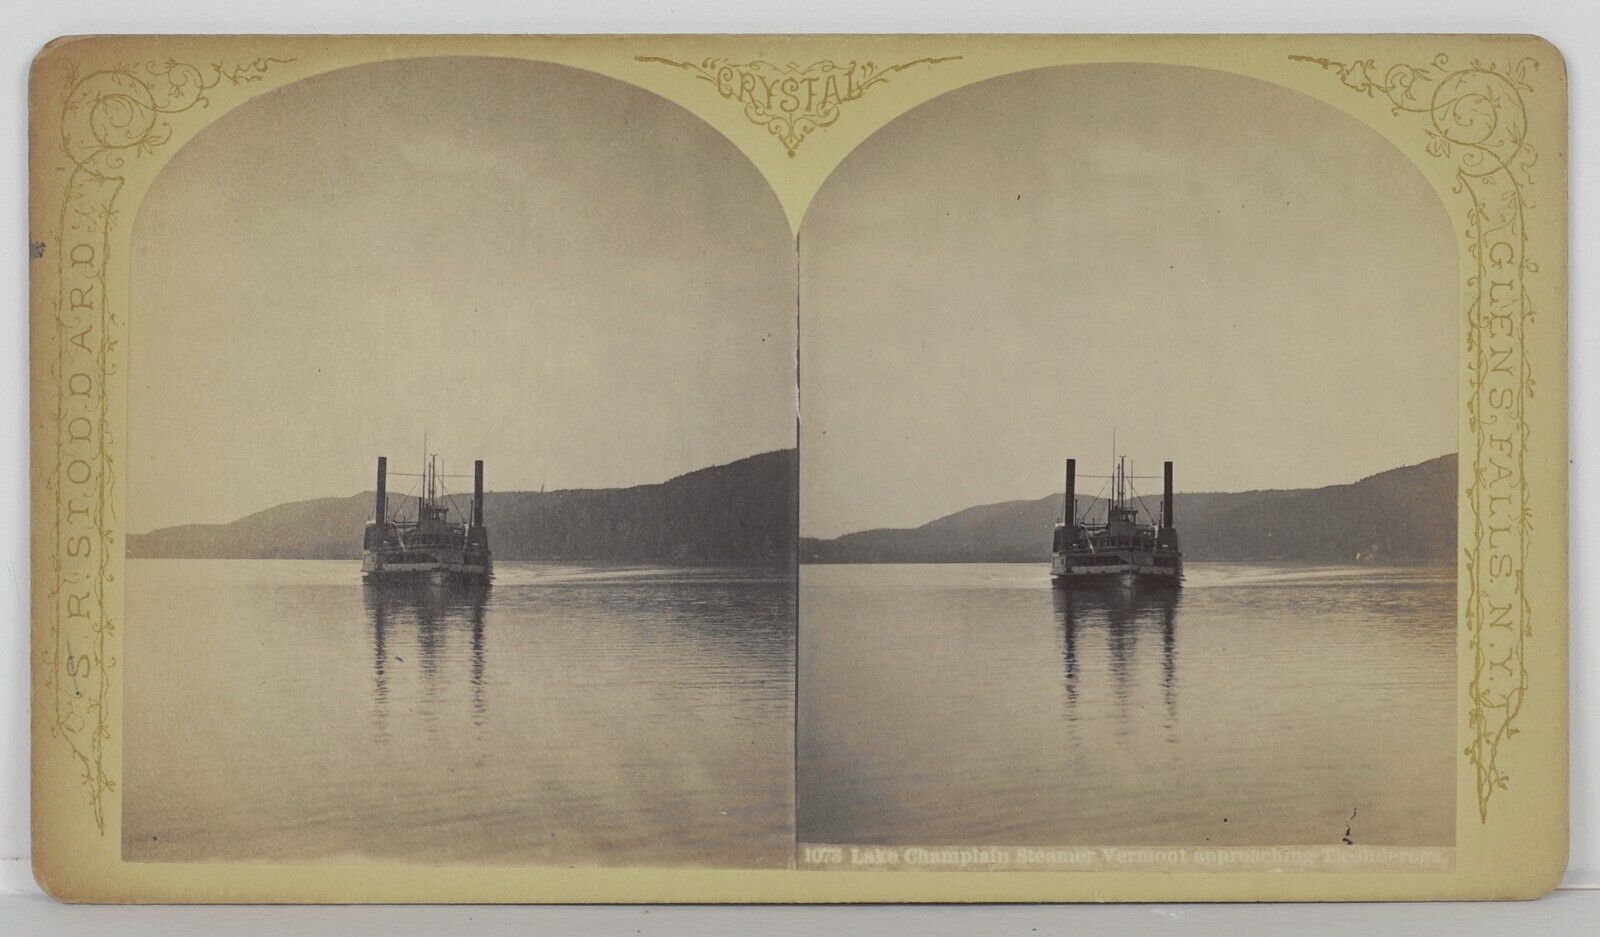 Seneca Ray Stoddard, Lake Champlain Steamer Vermont, 1870s, SV